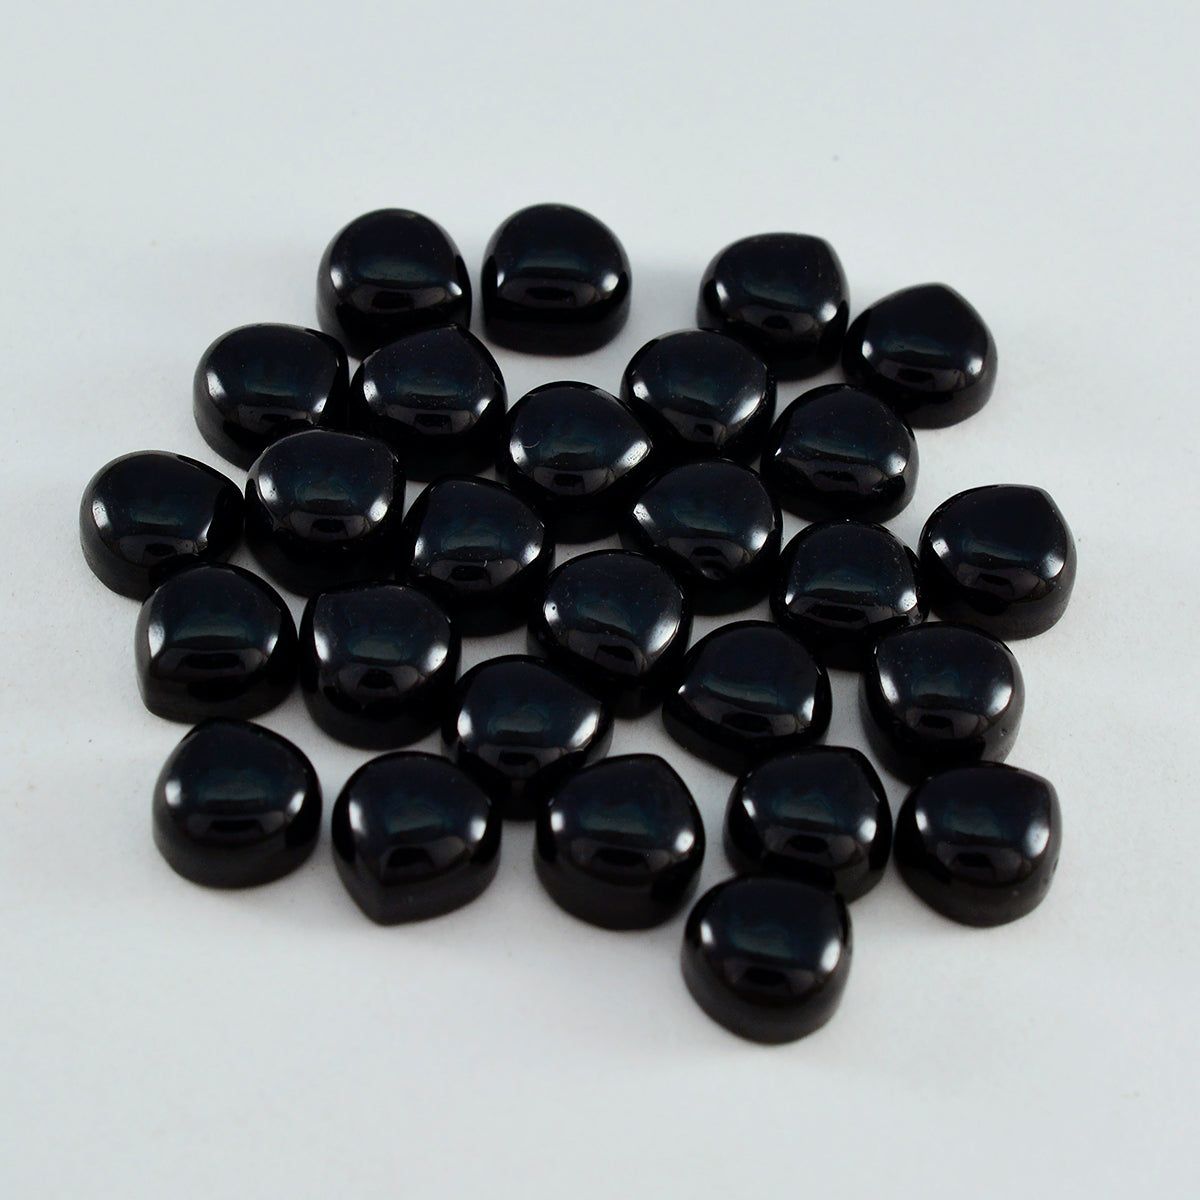 Riyogems 1PC Black Onyx Cabochon 7x7 mm Heart Shape sweet Quality Loose Gemstone